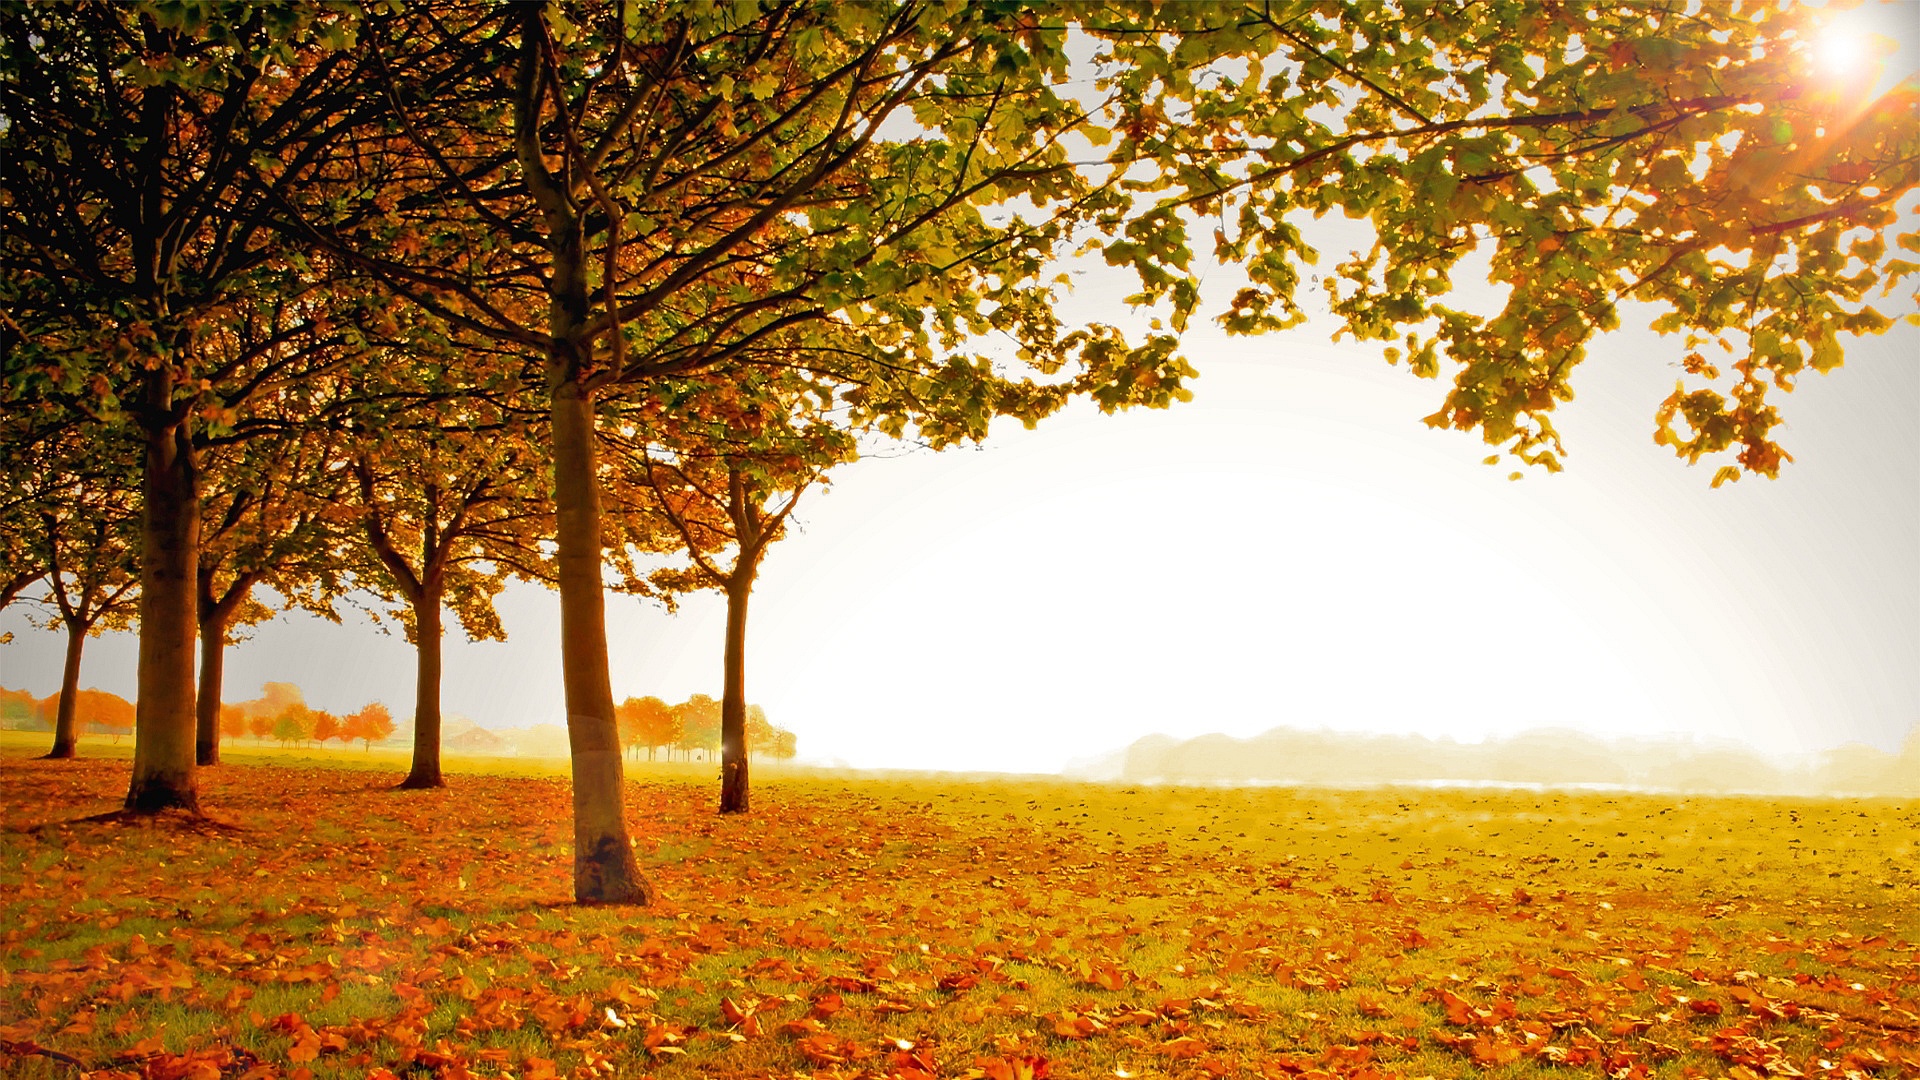 Beautiful Fall Scenery wallpaper | 1920x1080 | #29315